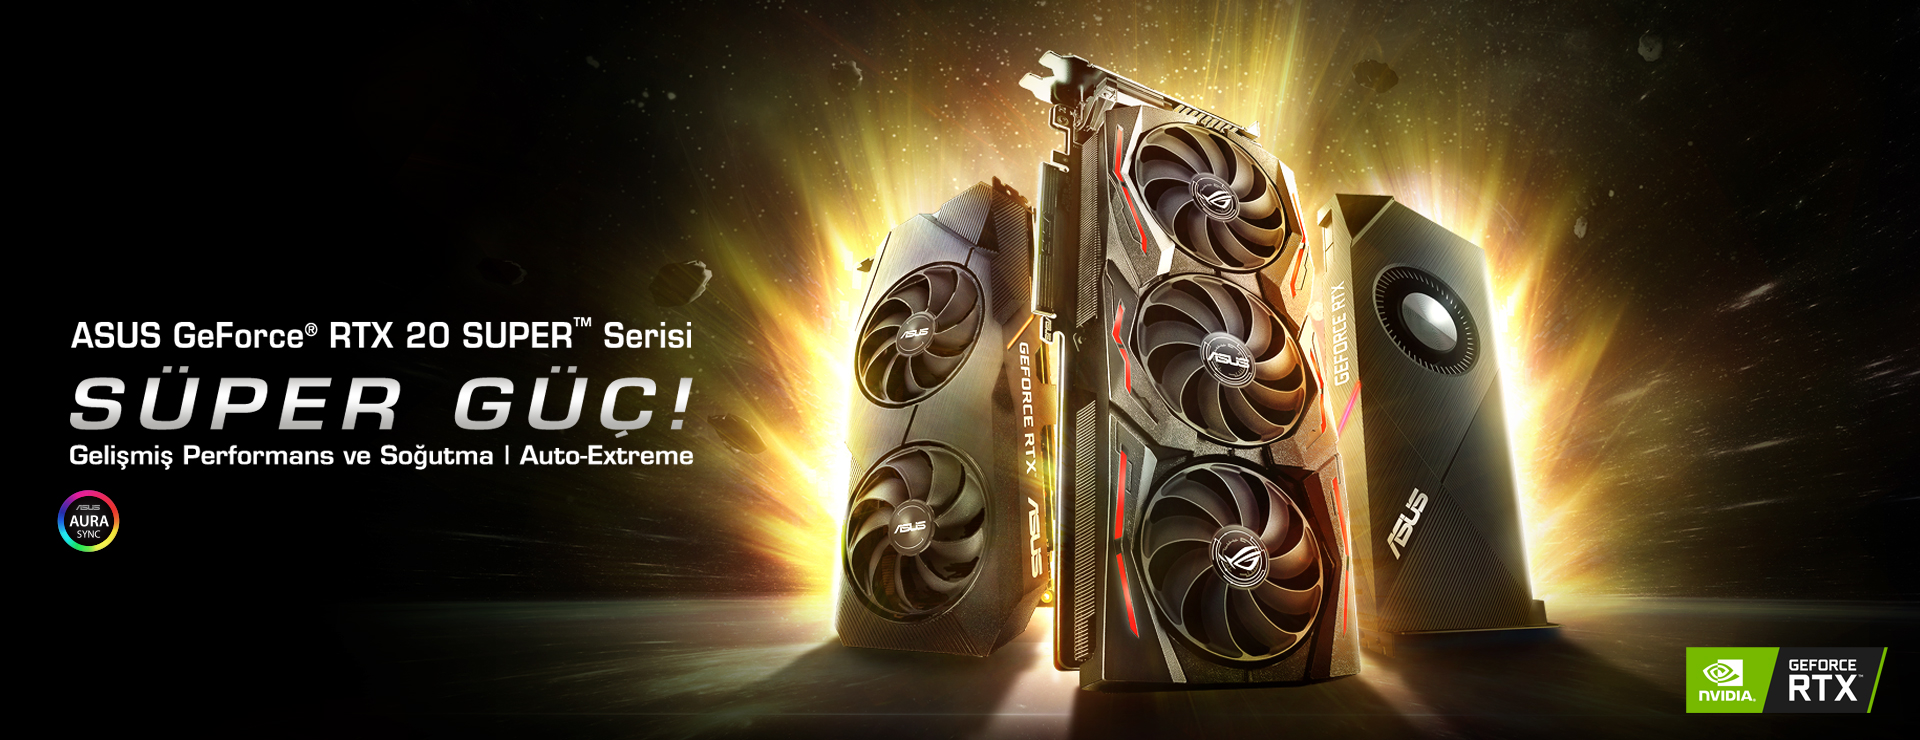 ASUS GeForce RTX 20 SUPER Serisi